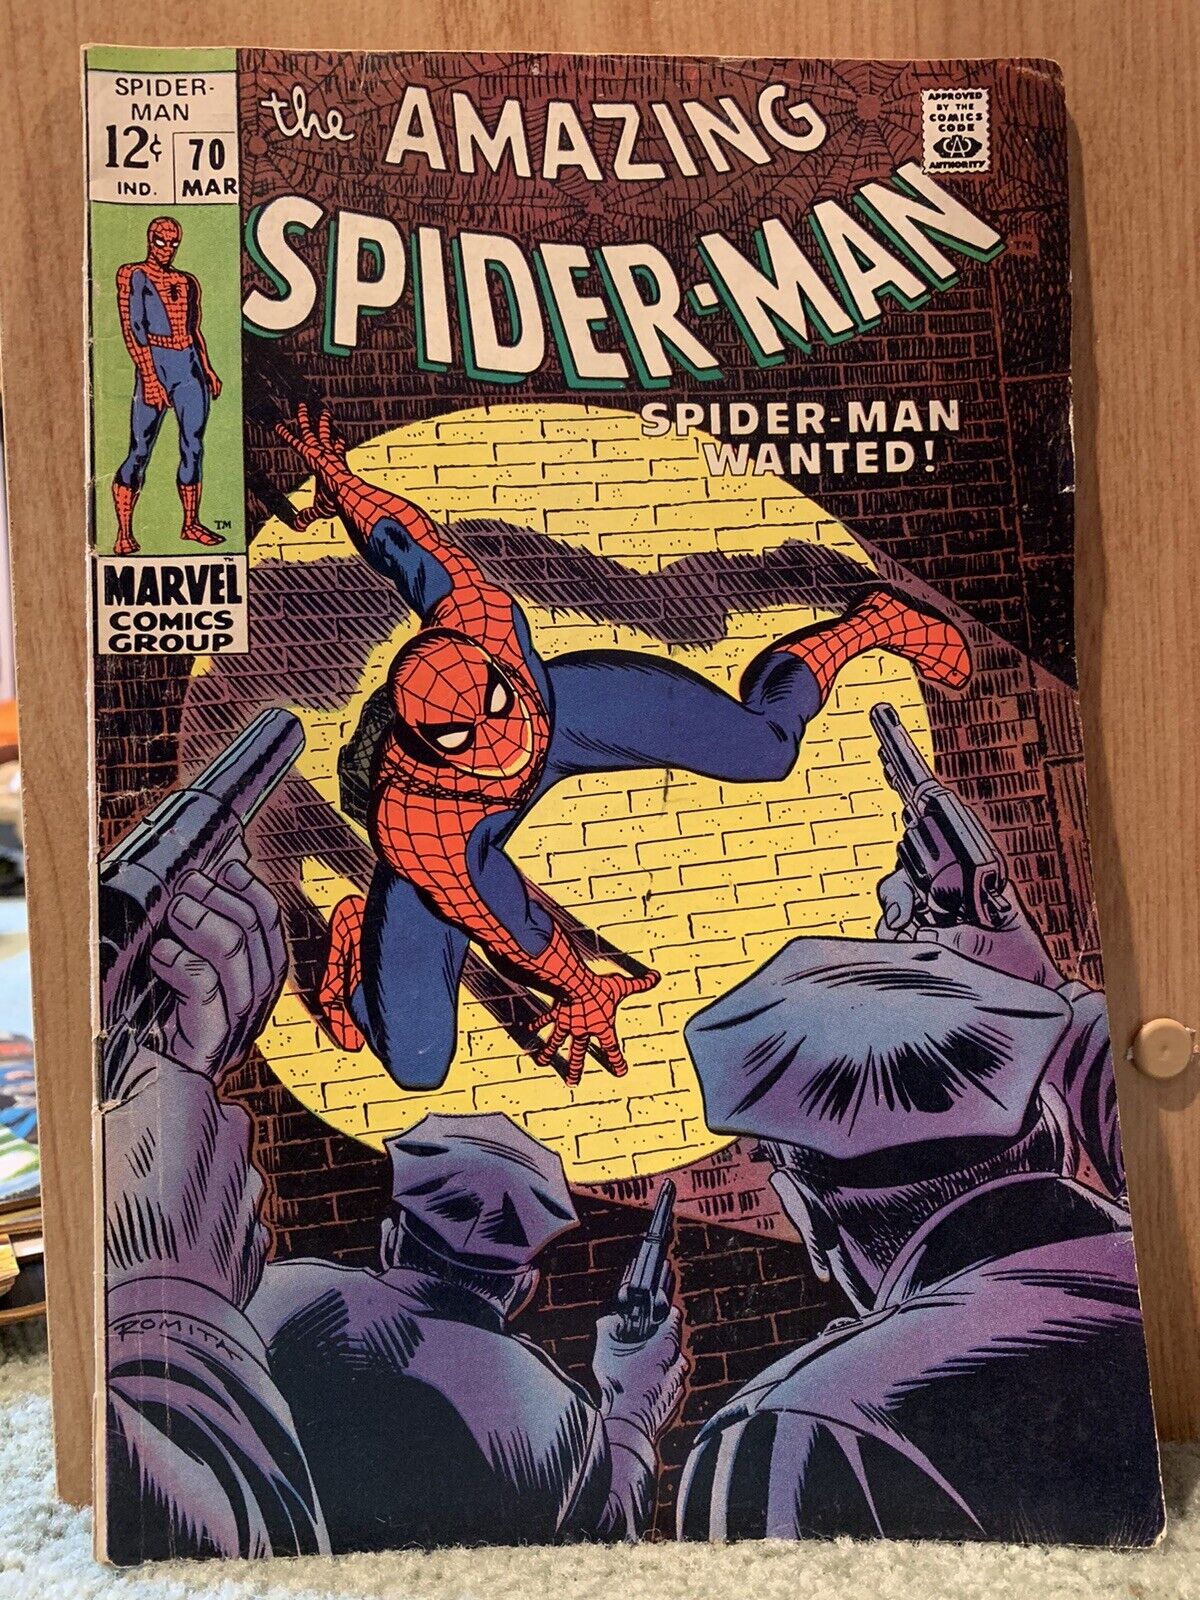 1969 Amazing Spider-man #70 High Grade Marvel Comic Book John Romita Cover Art